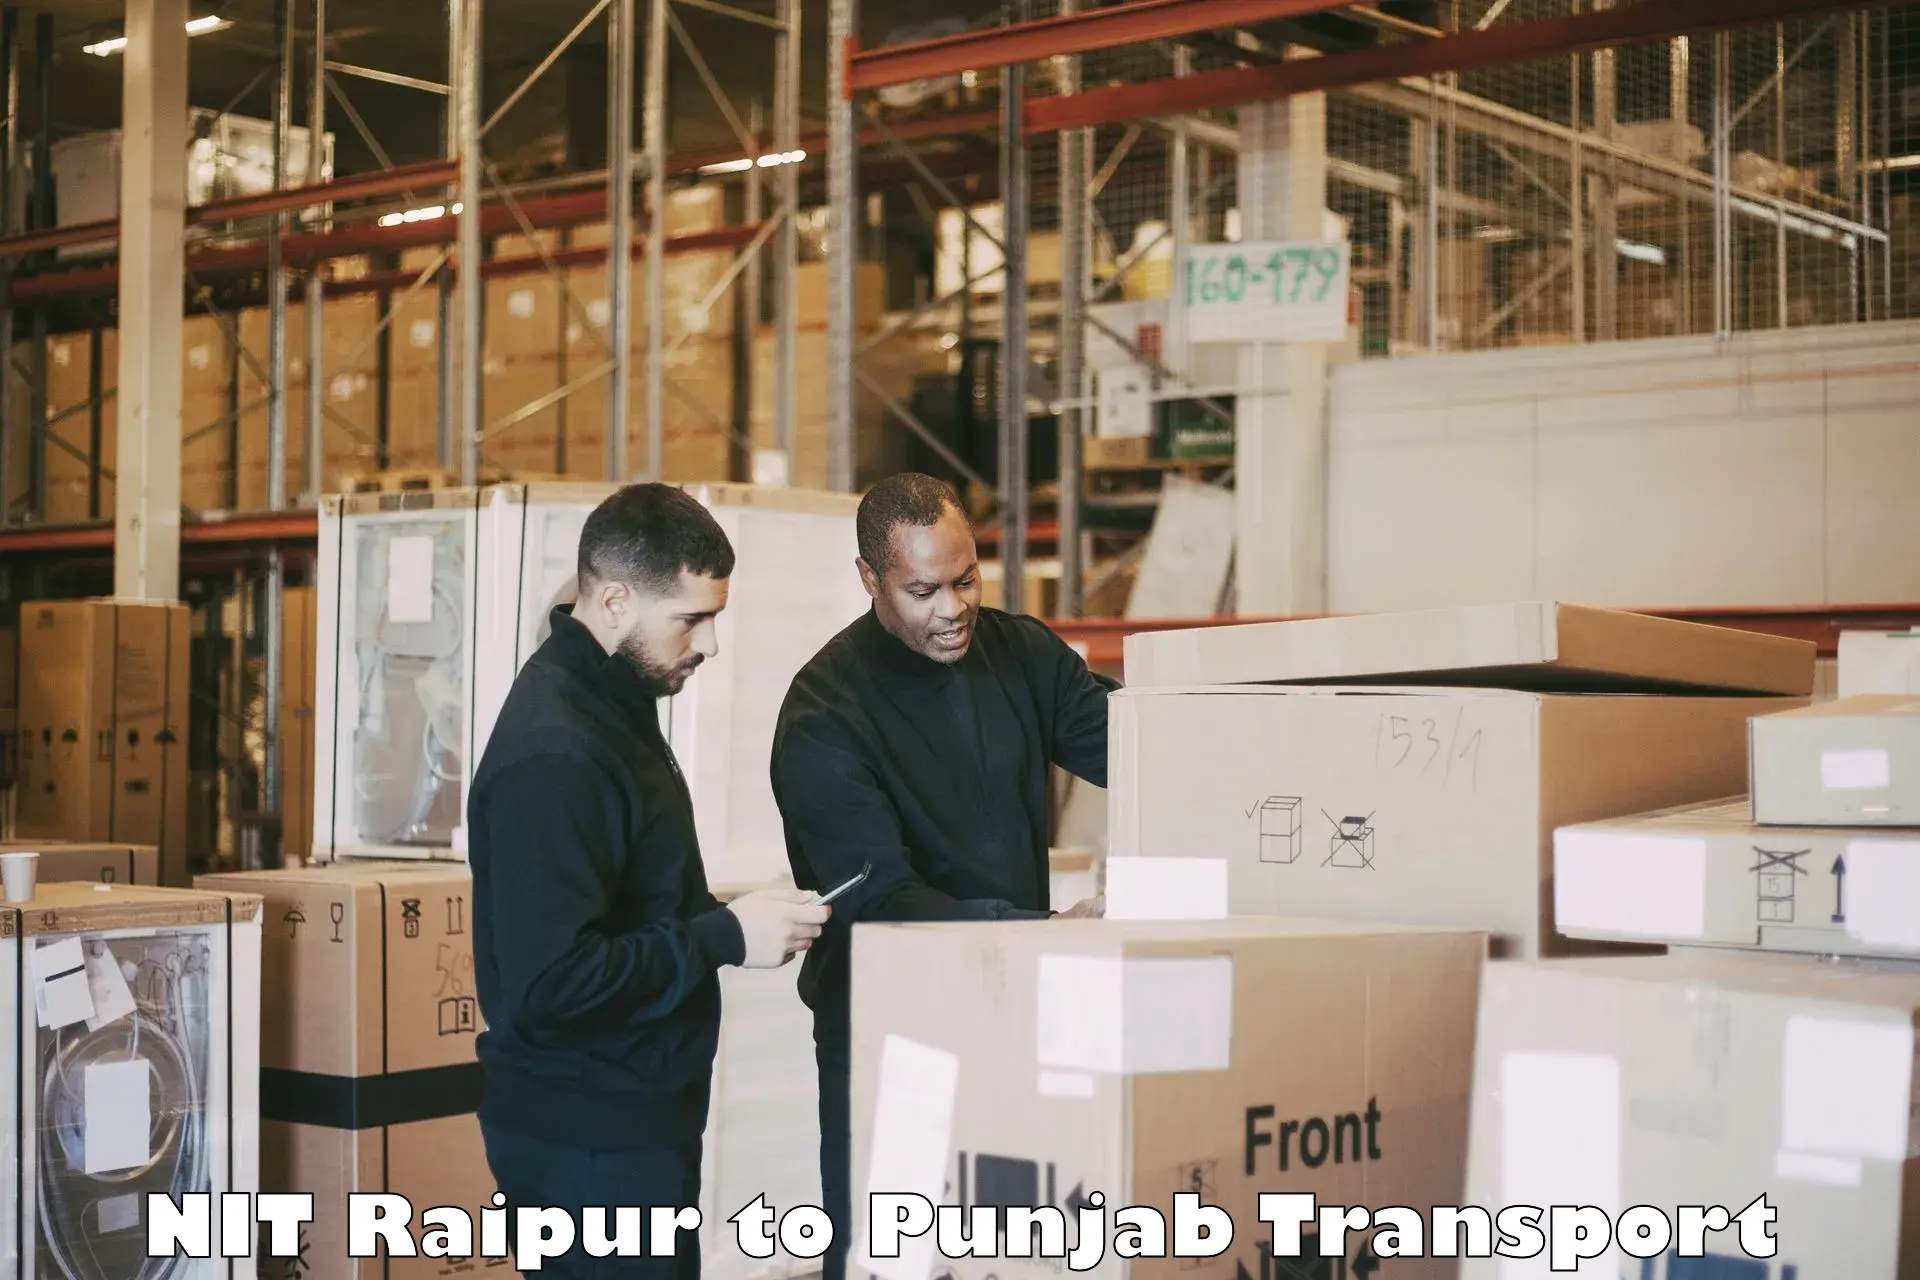 Lorry transport service NIT Raipur to Kotkapura